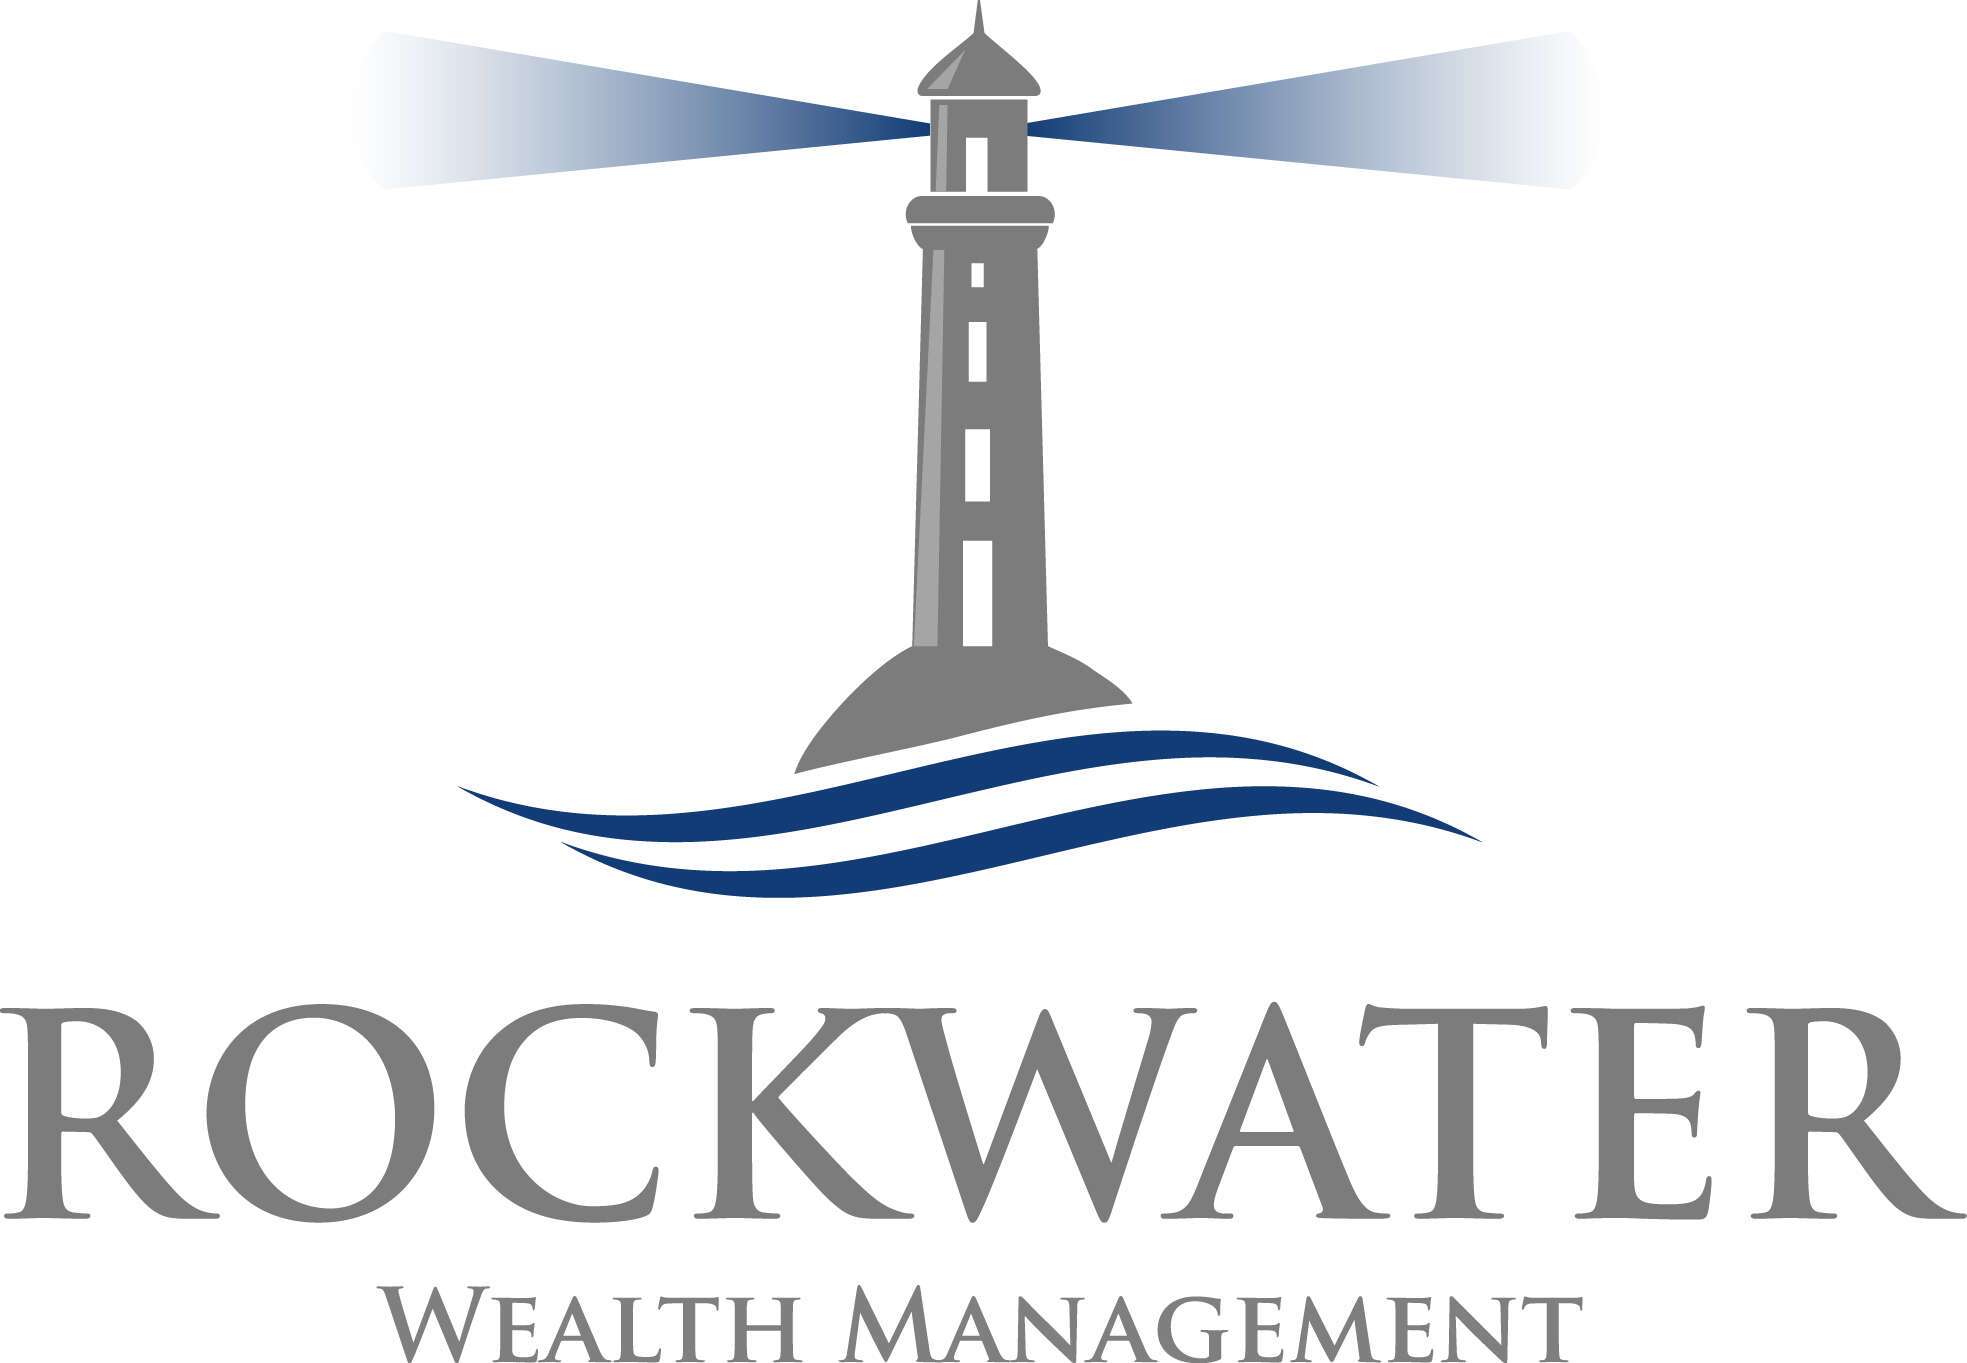 2. Rockwater Wealth Management